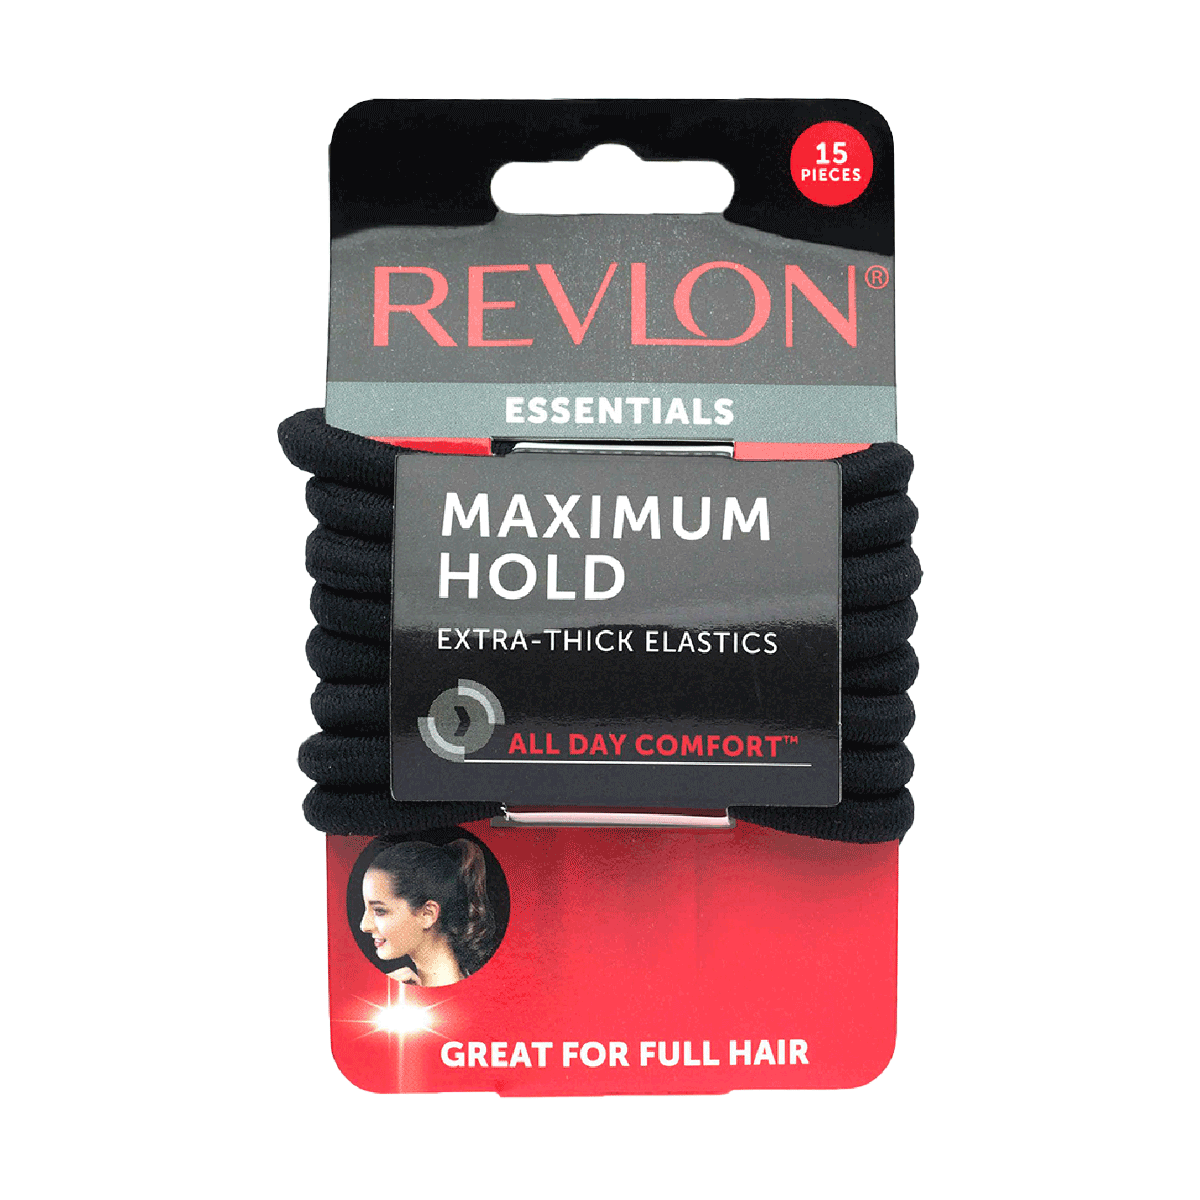 Colets Revlon Black Extra Thick Línea Essentials (15 unidades)